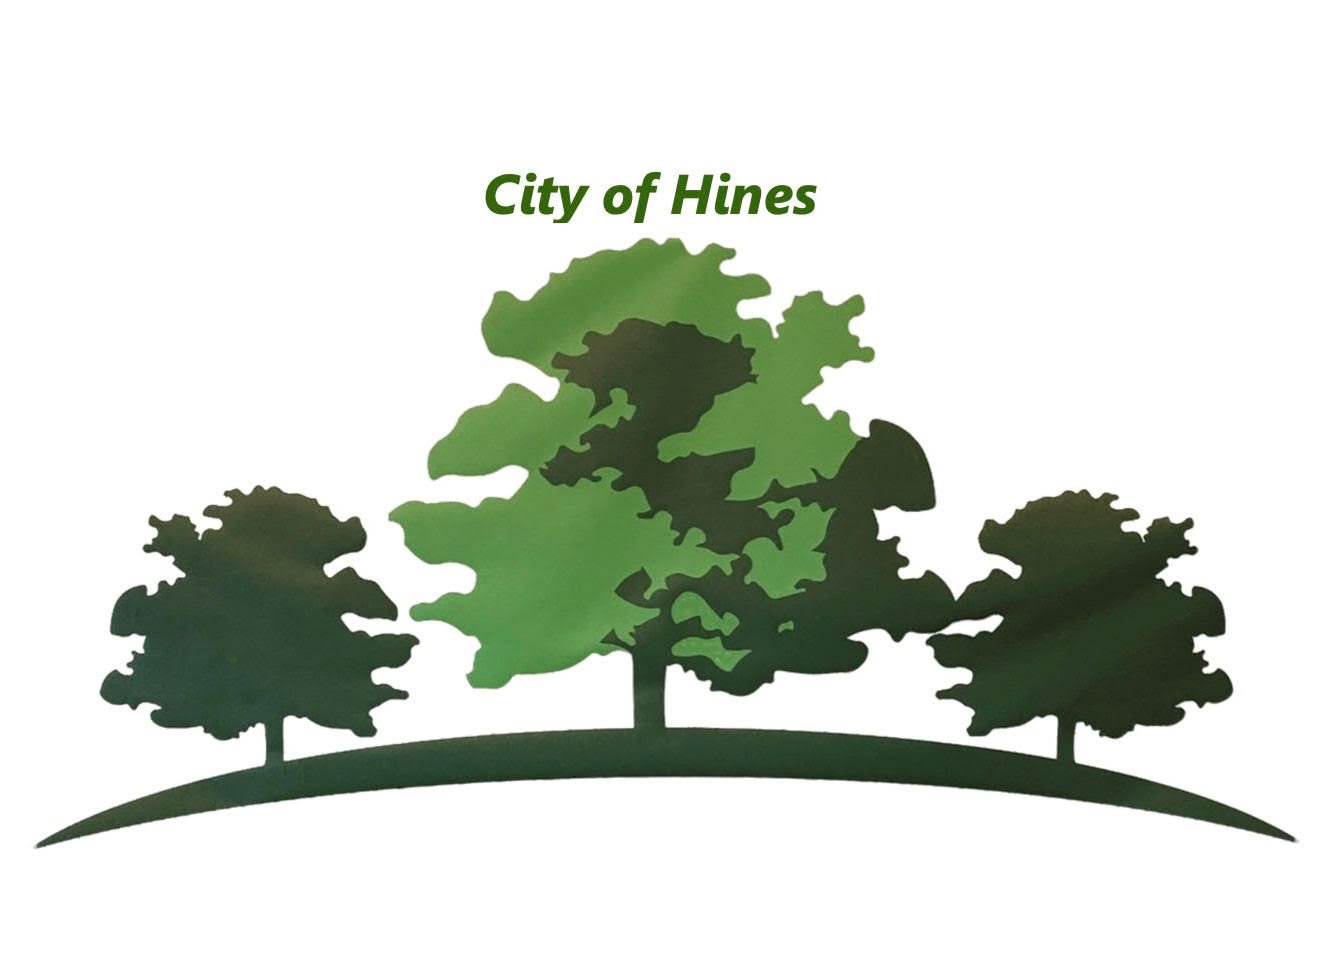 City of Hines logo.jpg